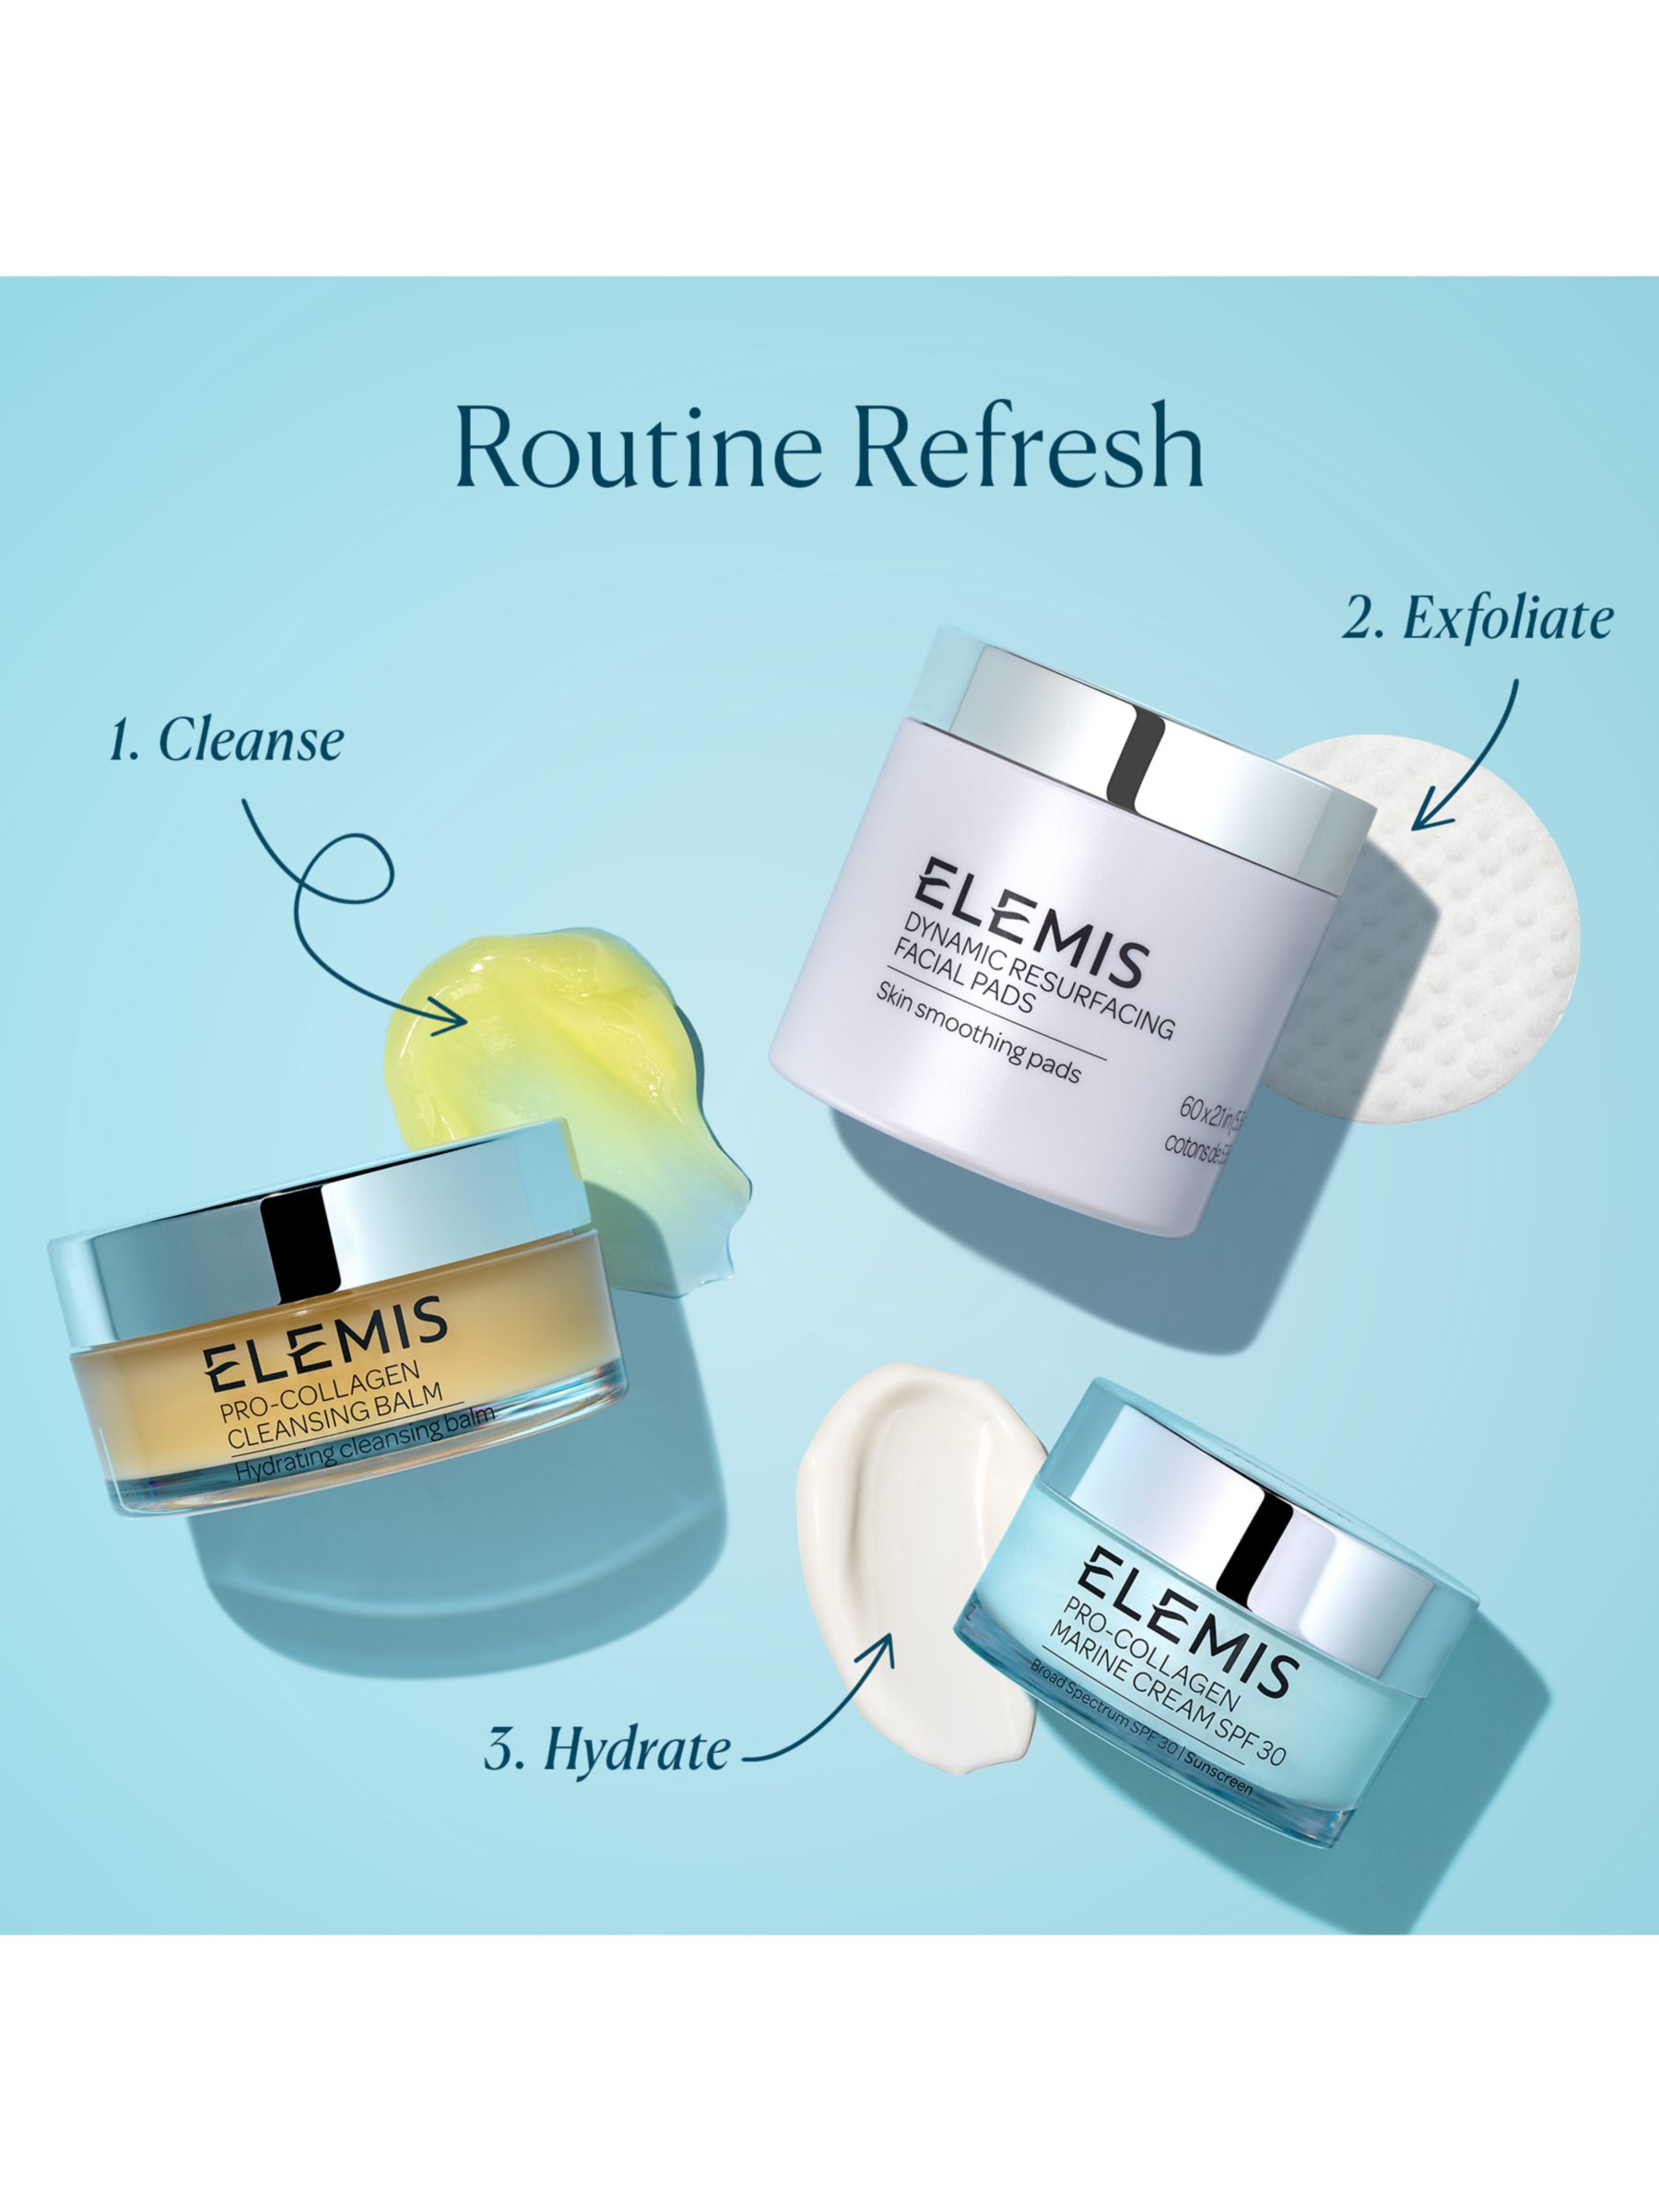 Elemis Pro-Collagen Marine Cream SPF 30 Anti-Wrinkle Day Cream, 50ml